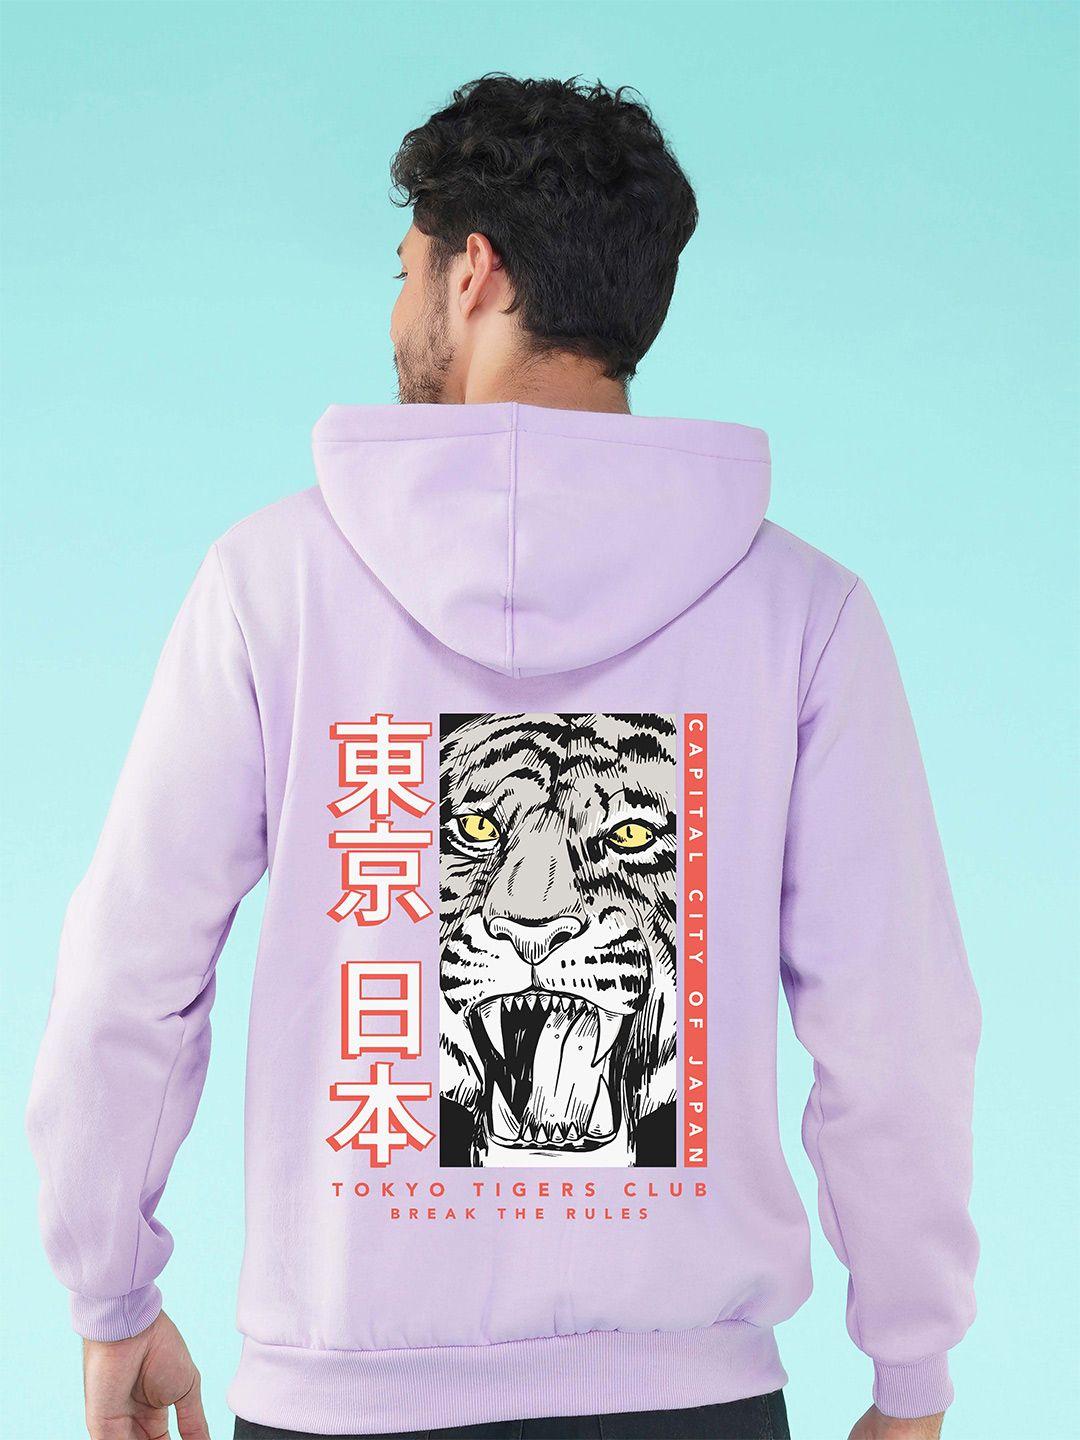 nusyl graphic printed hooded fleece pullover sweatshirt